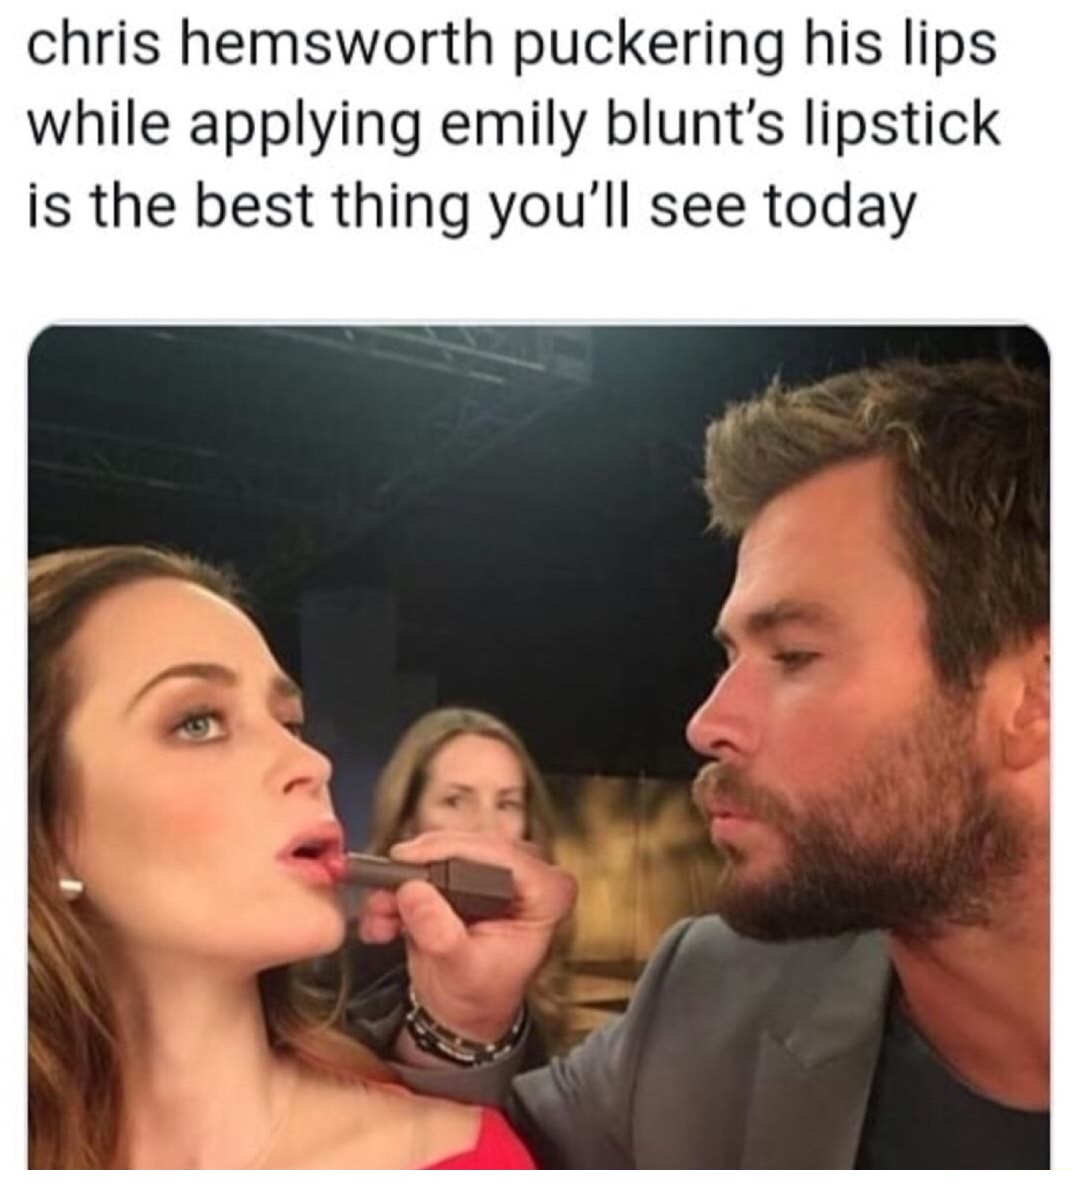 memes - chris hemsworth applying lipstick on emily blunt - chris hemsworth puckering his lips while applying emily blunt's lipstick is the best thing you'll see today